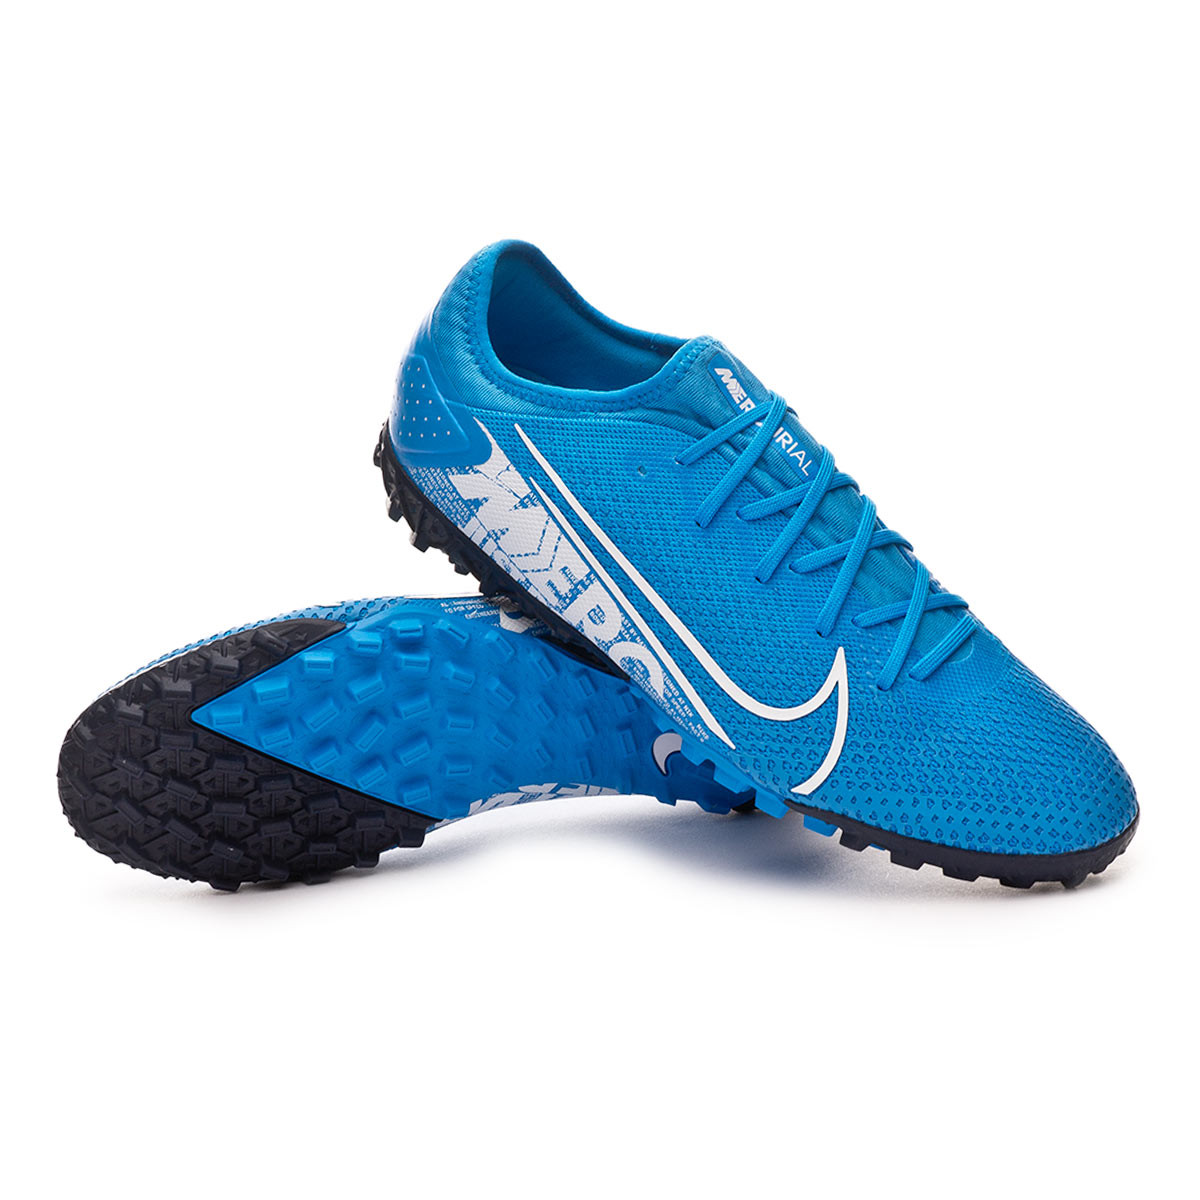 Football Boots Nike Mercurial Vapor XIII Pro Turf Blue hero-White-Obsidian  - Football store Fútbol Emotion